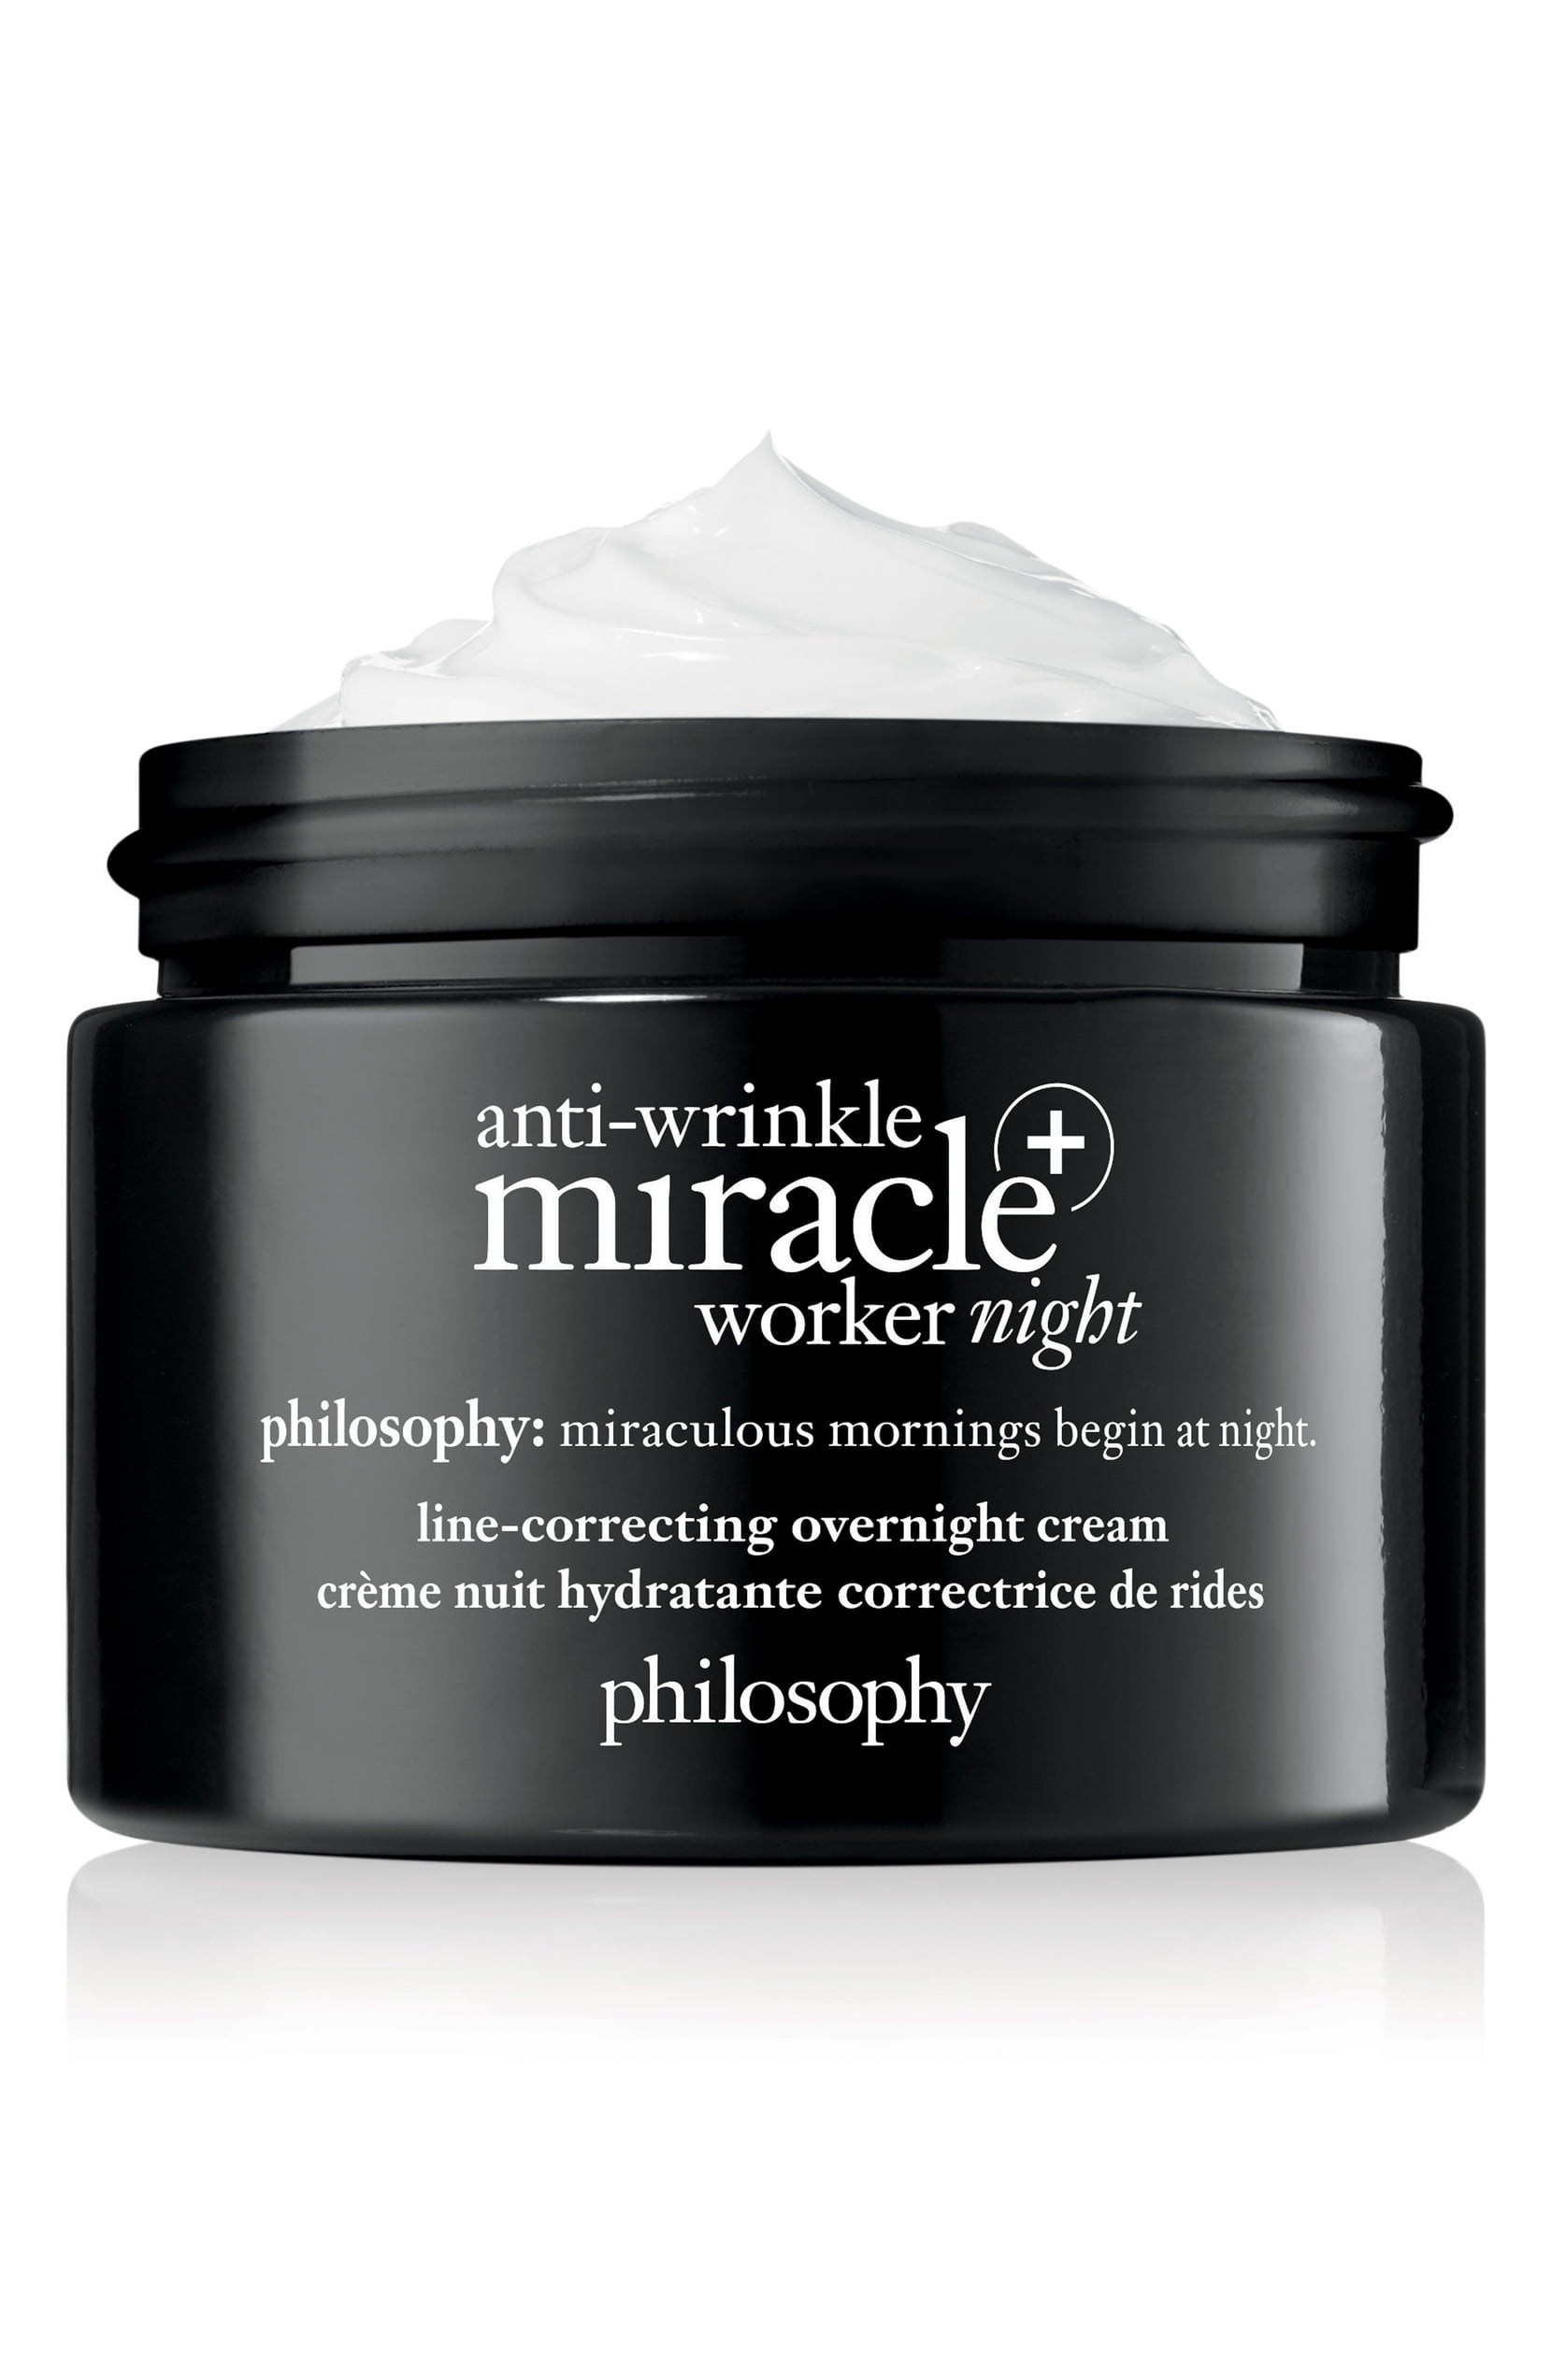 philosophy anti-wrinkle miracle worker night+ line-correcting overnight cream